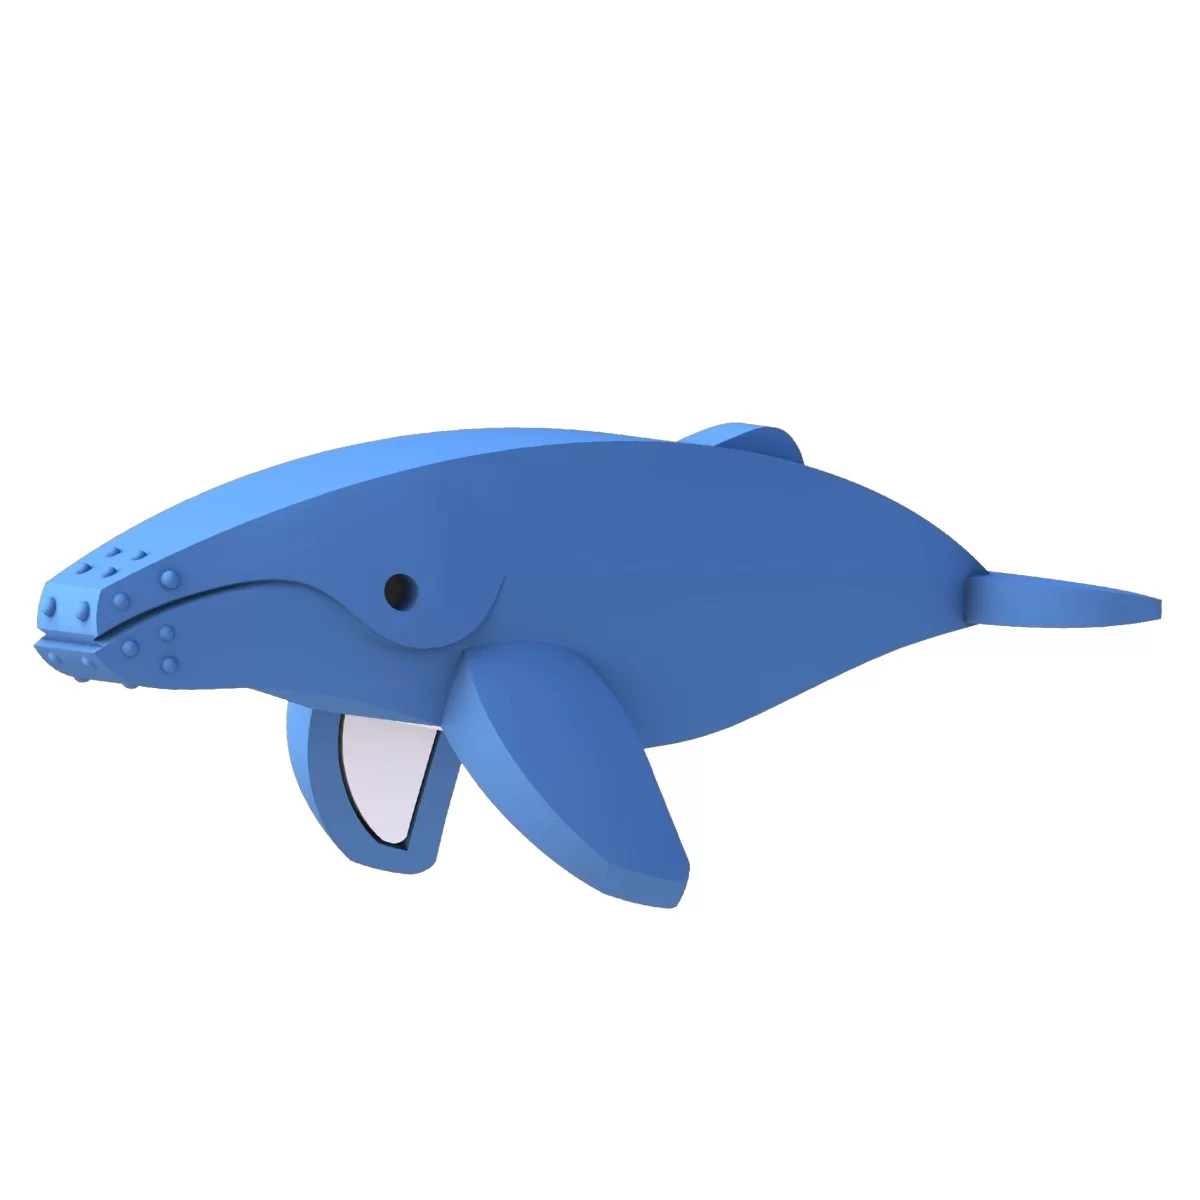 Фигурка магнитная Горбатый кит - фото